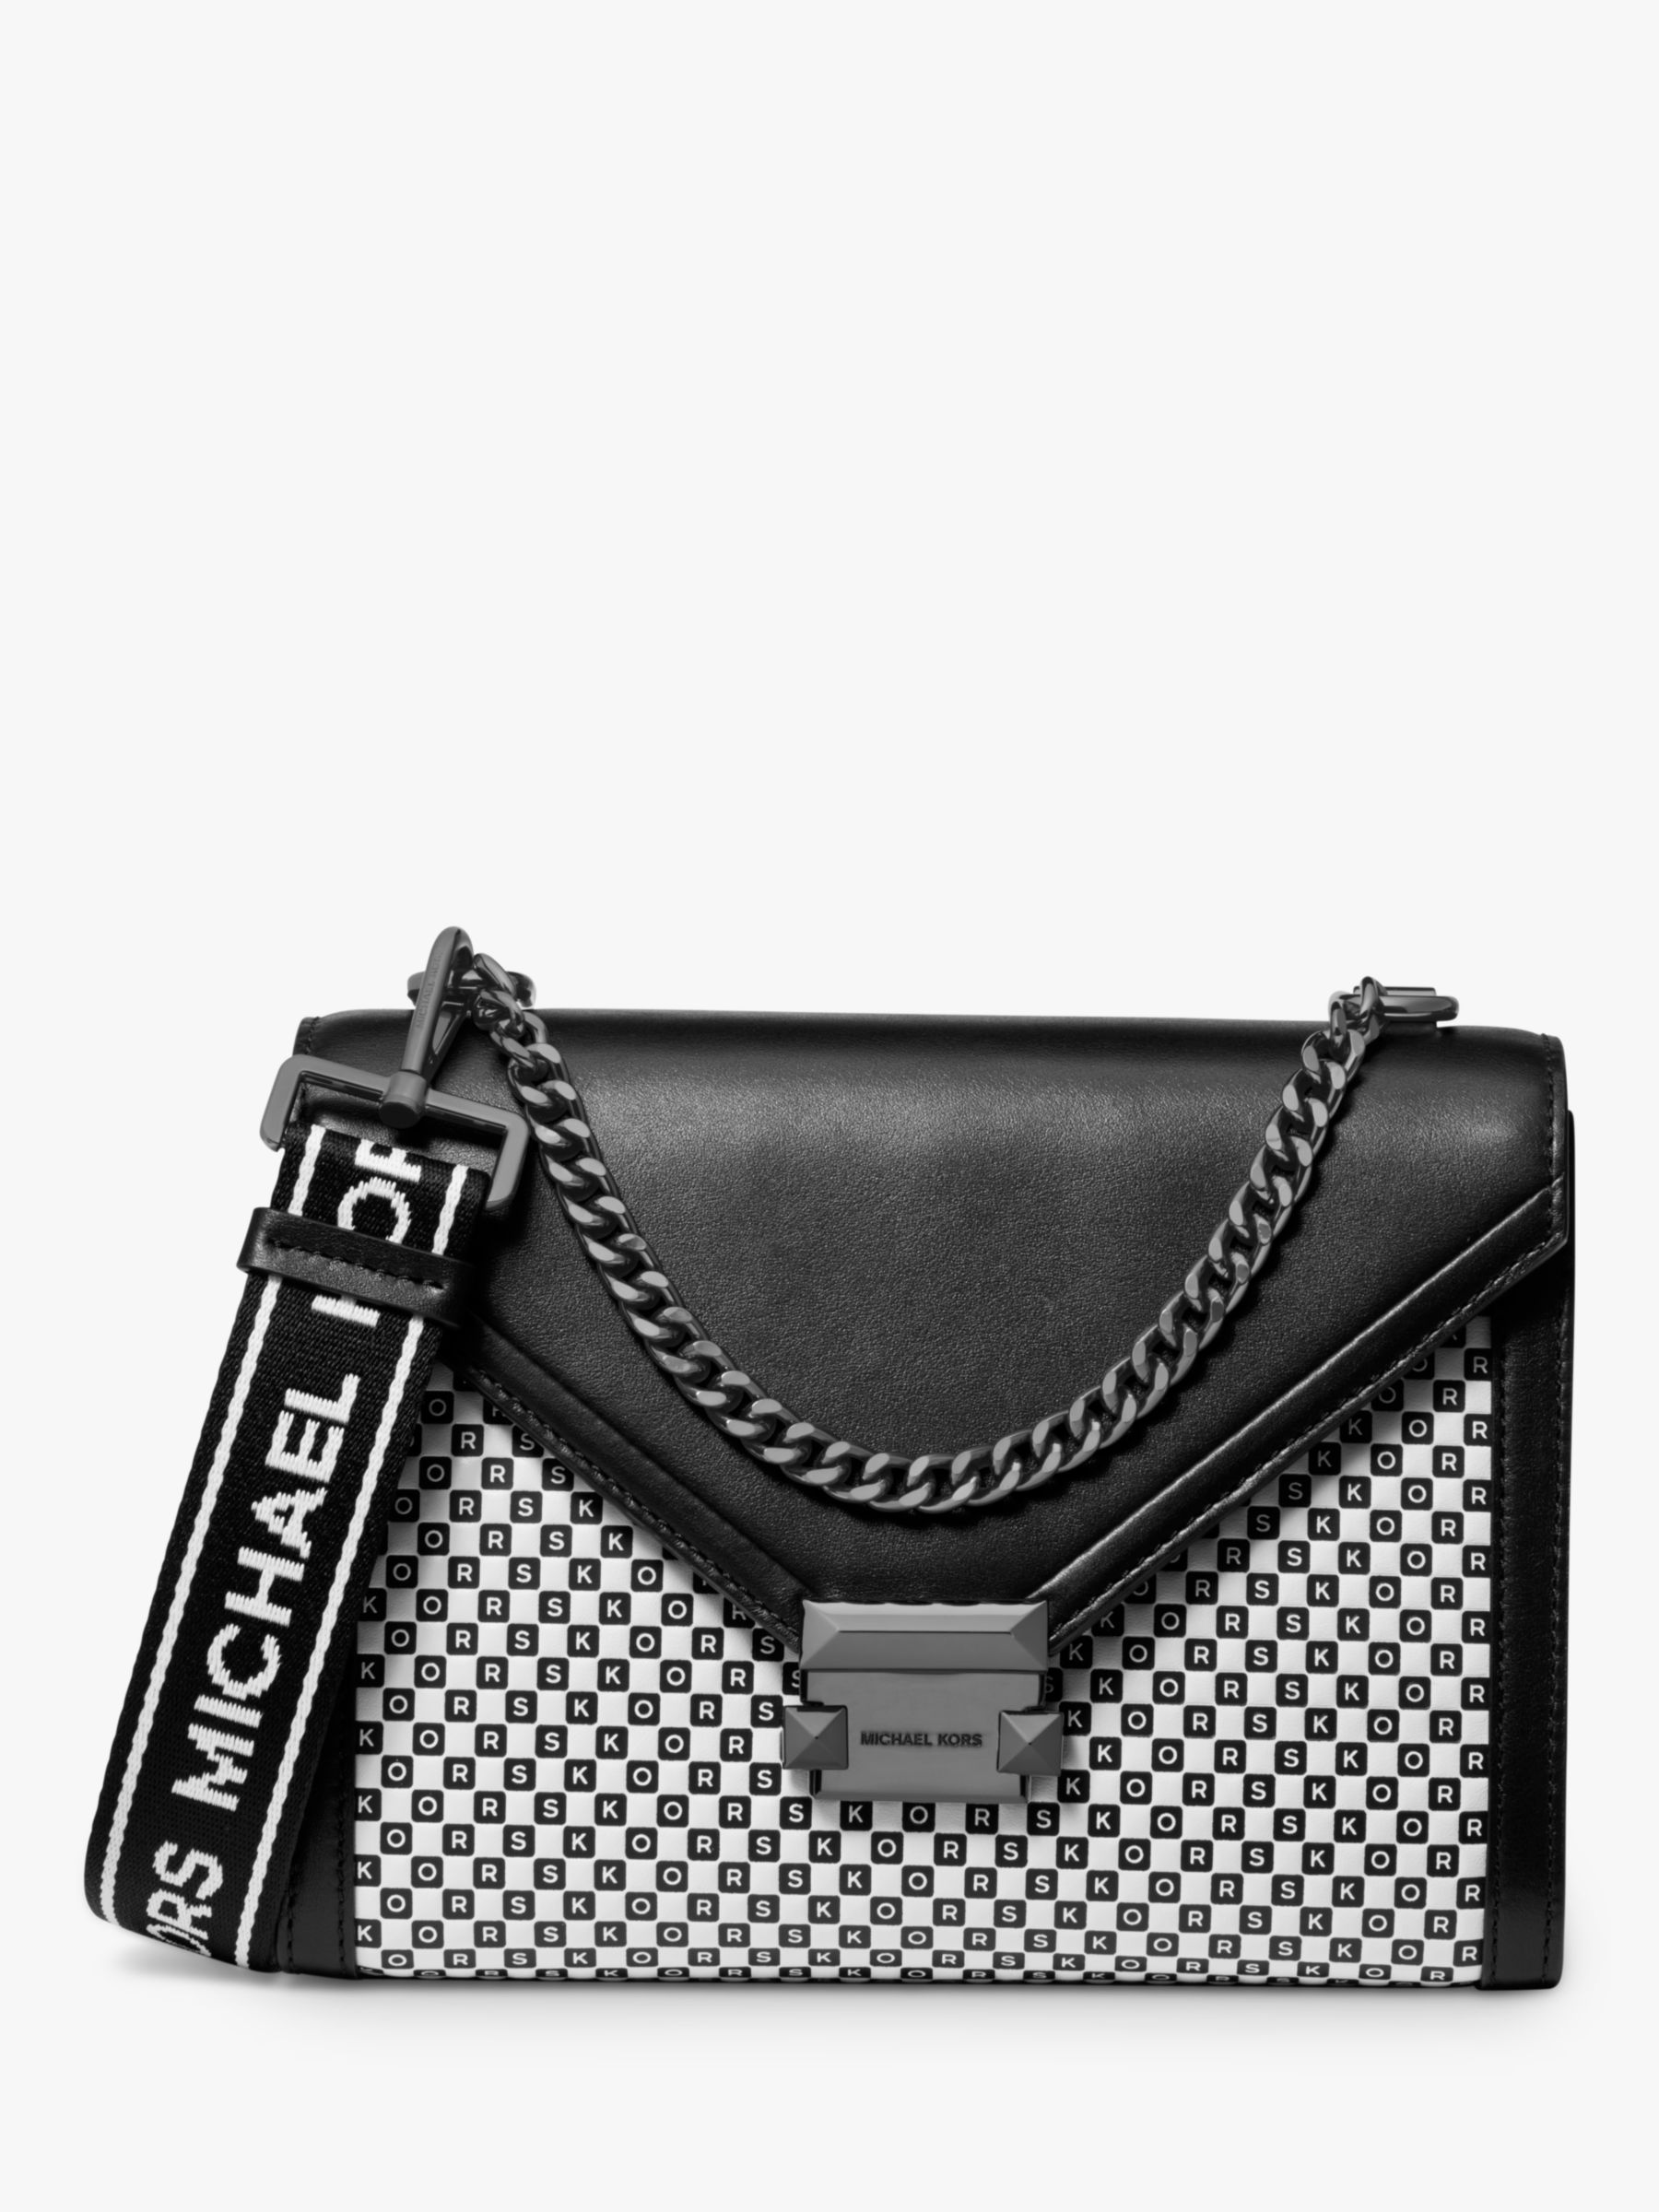 michael kors black and white handbags